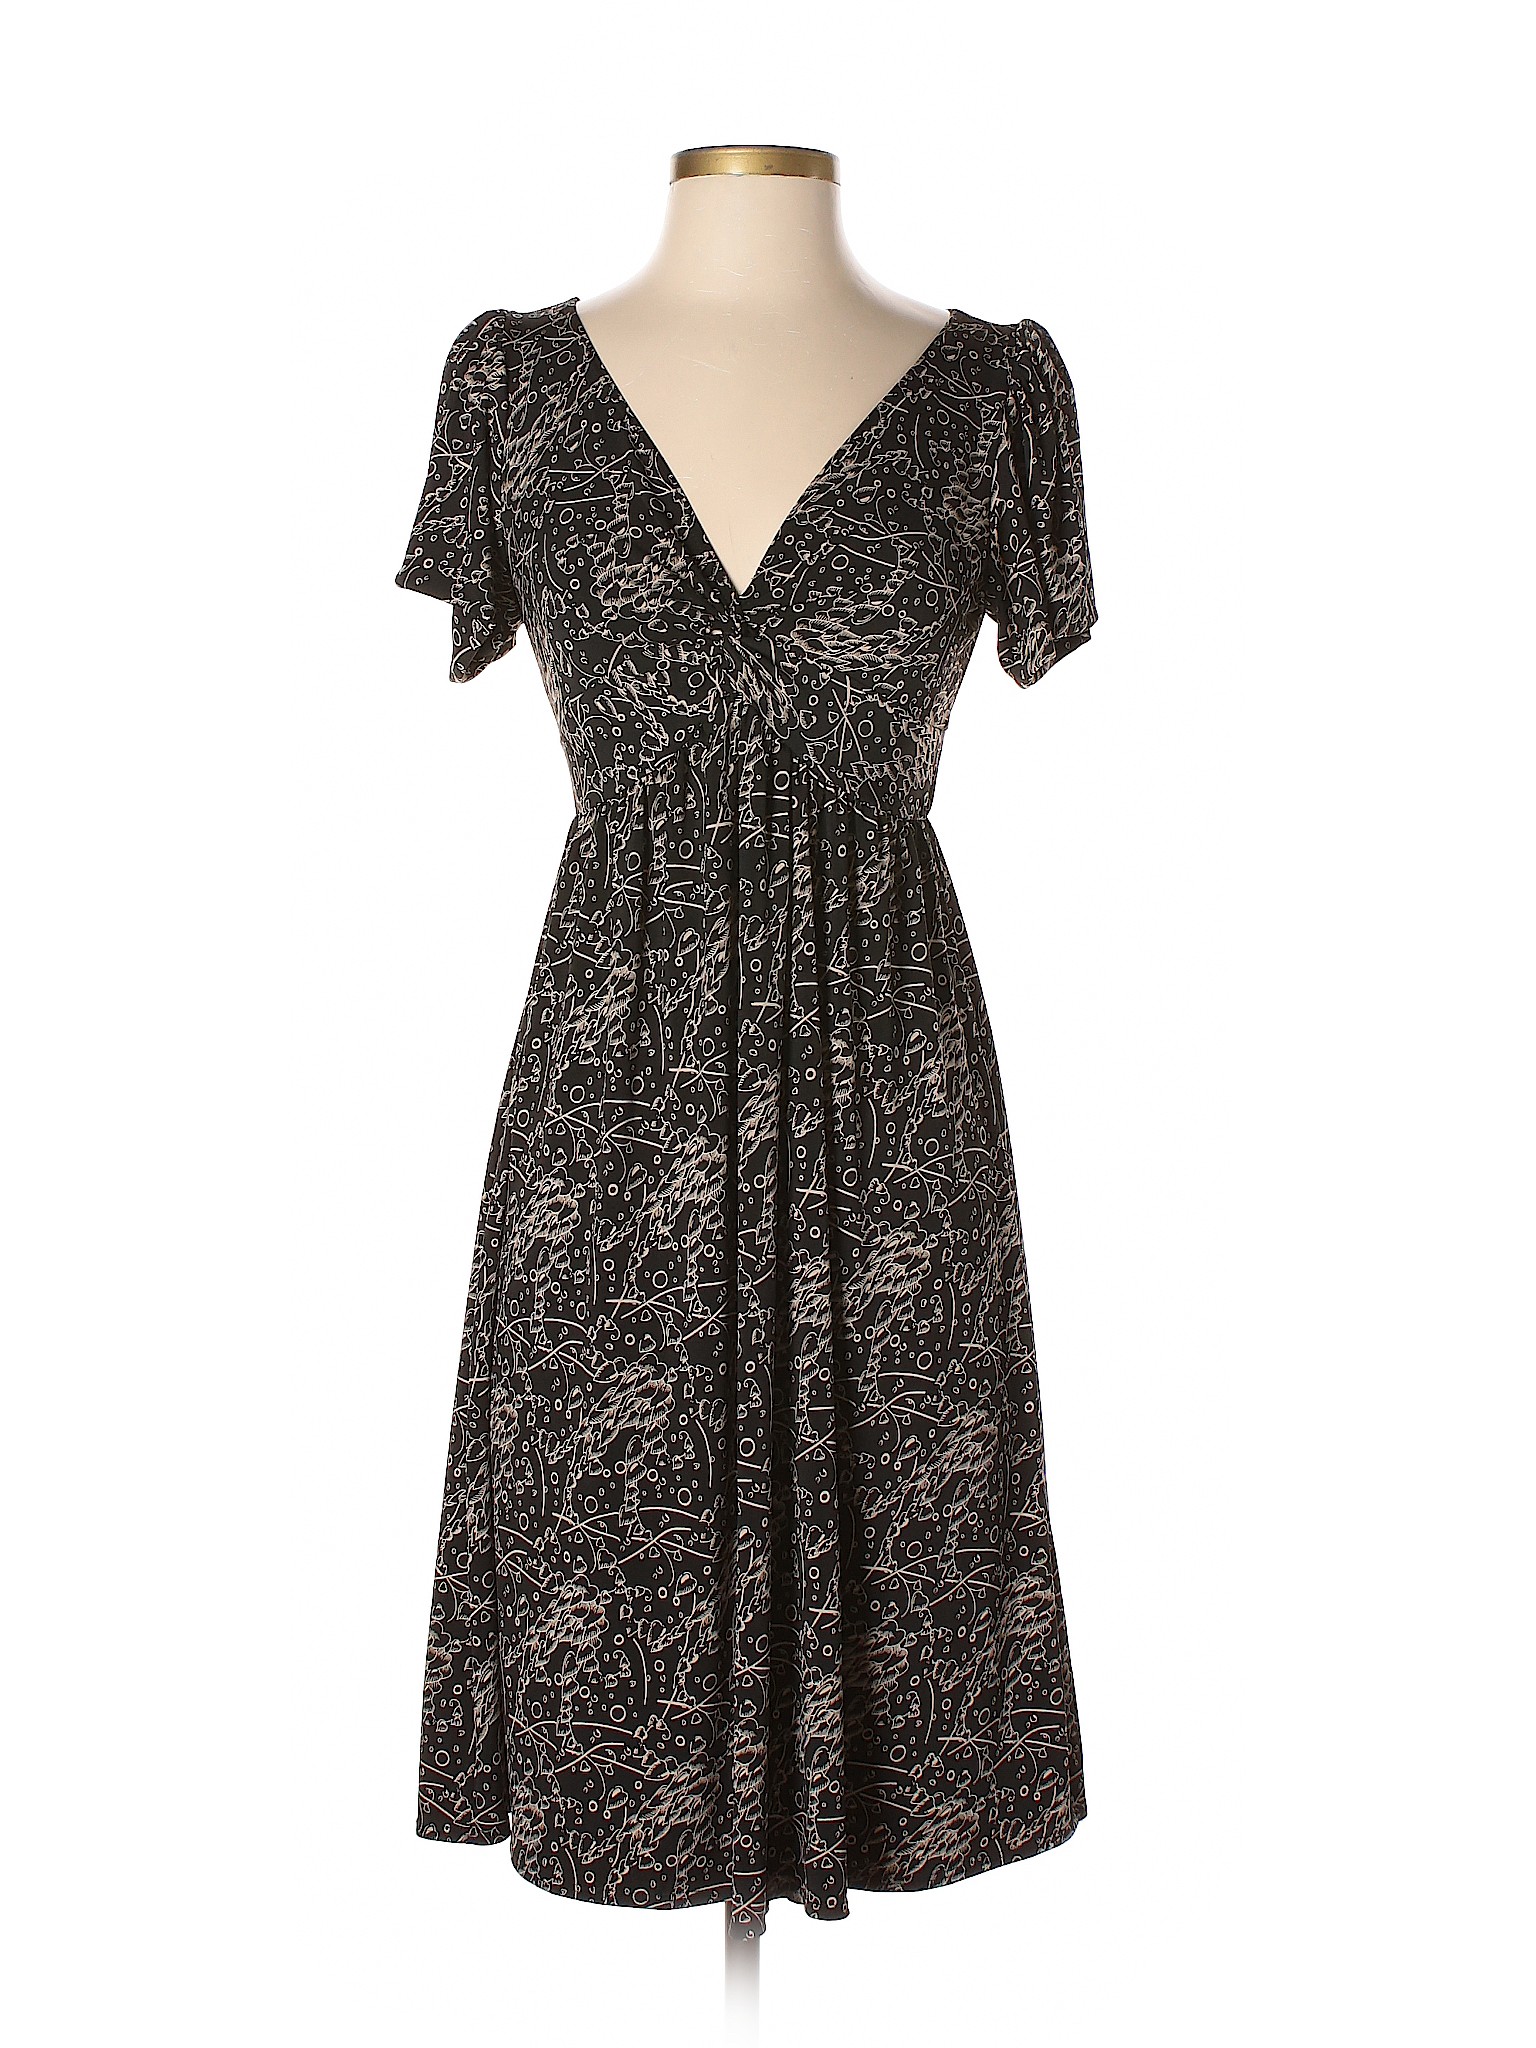 Max Studio Solid Black Casual Dress Size S - 77% off | thredUP